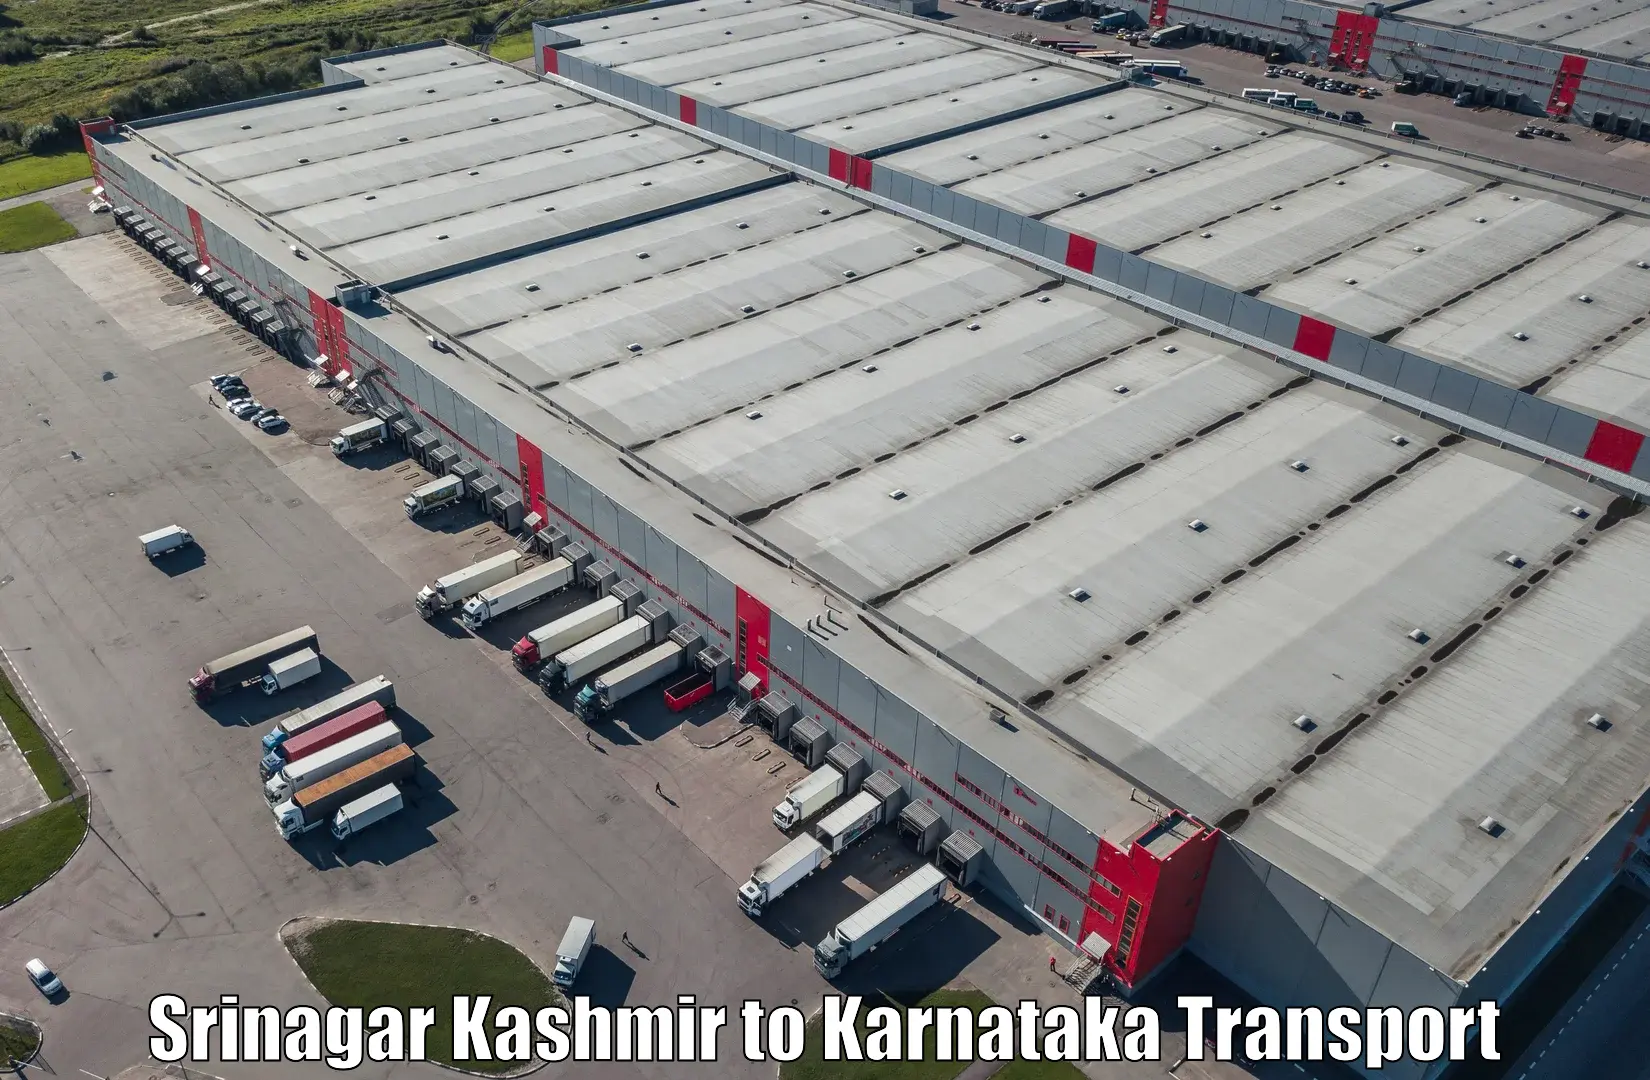 Truck transport companies in India Srinagar Kashmir to Mundgod